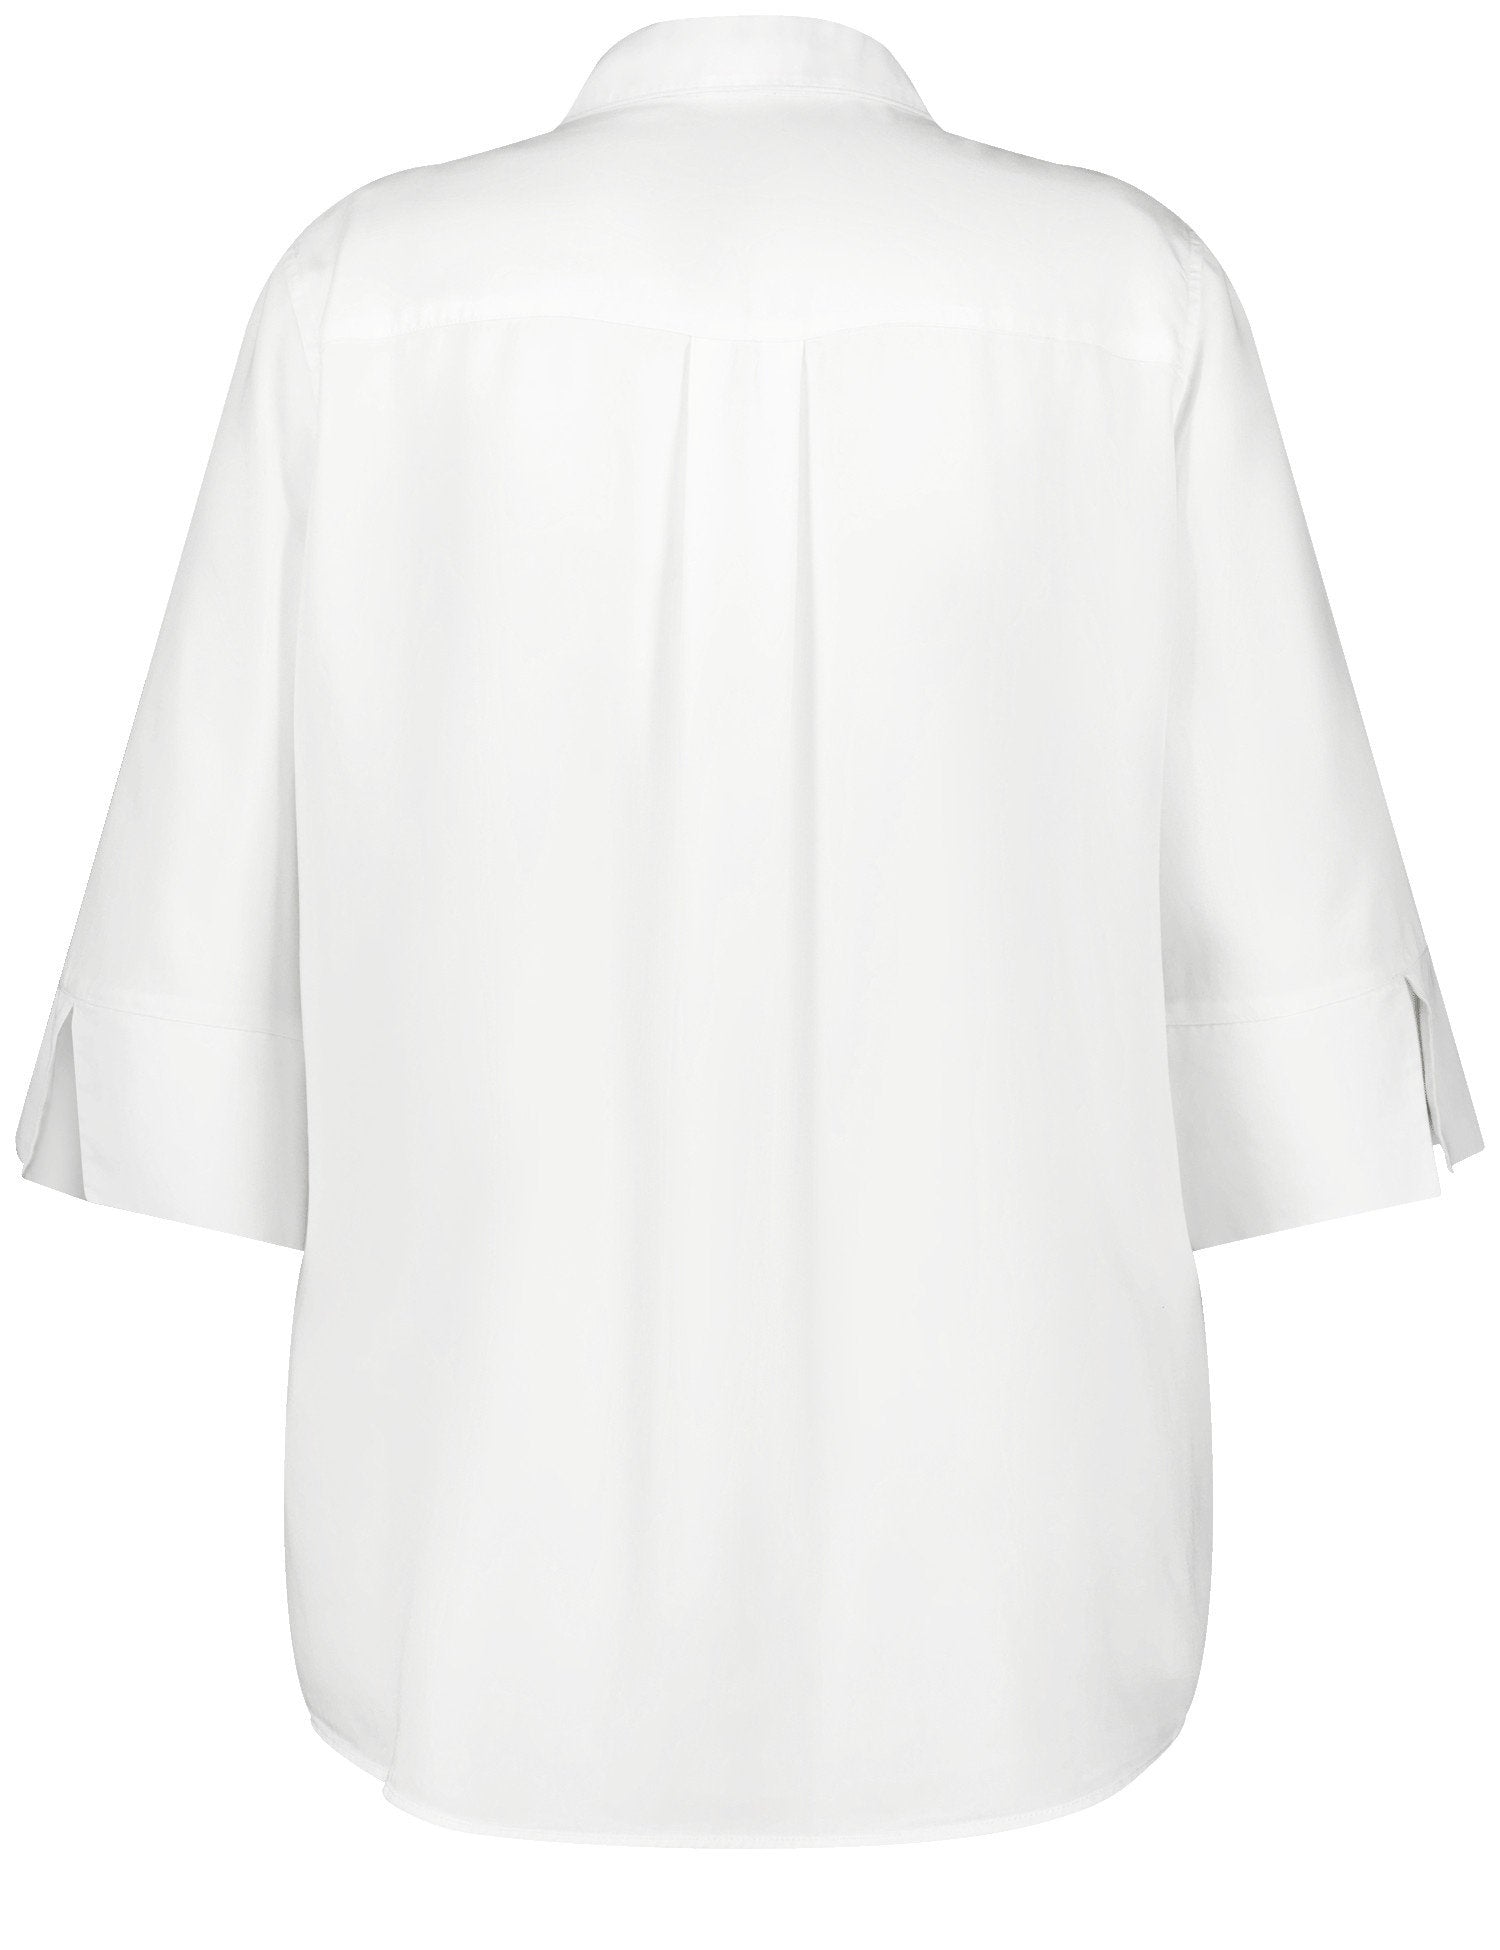 3/4 Sleeve Blouse Made Of Tencelª Lyocell_460044-21068_9600_03